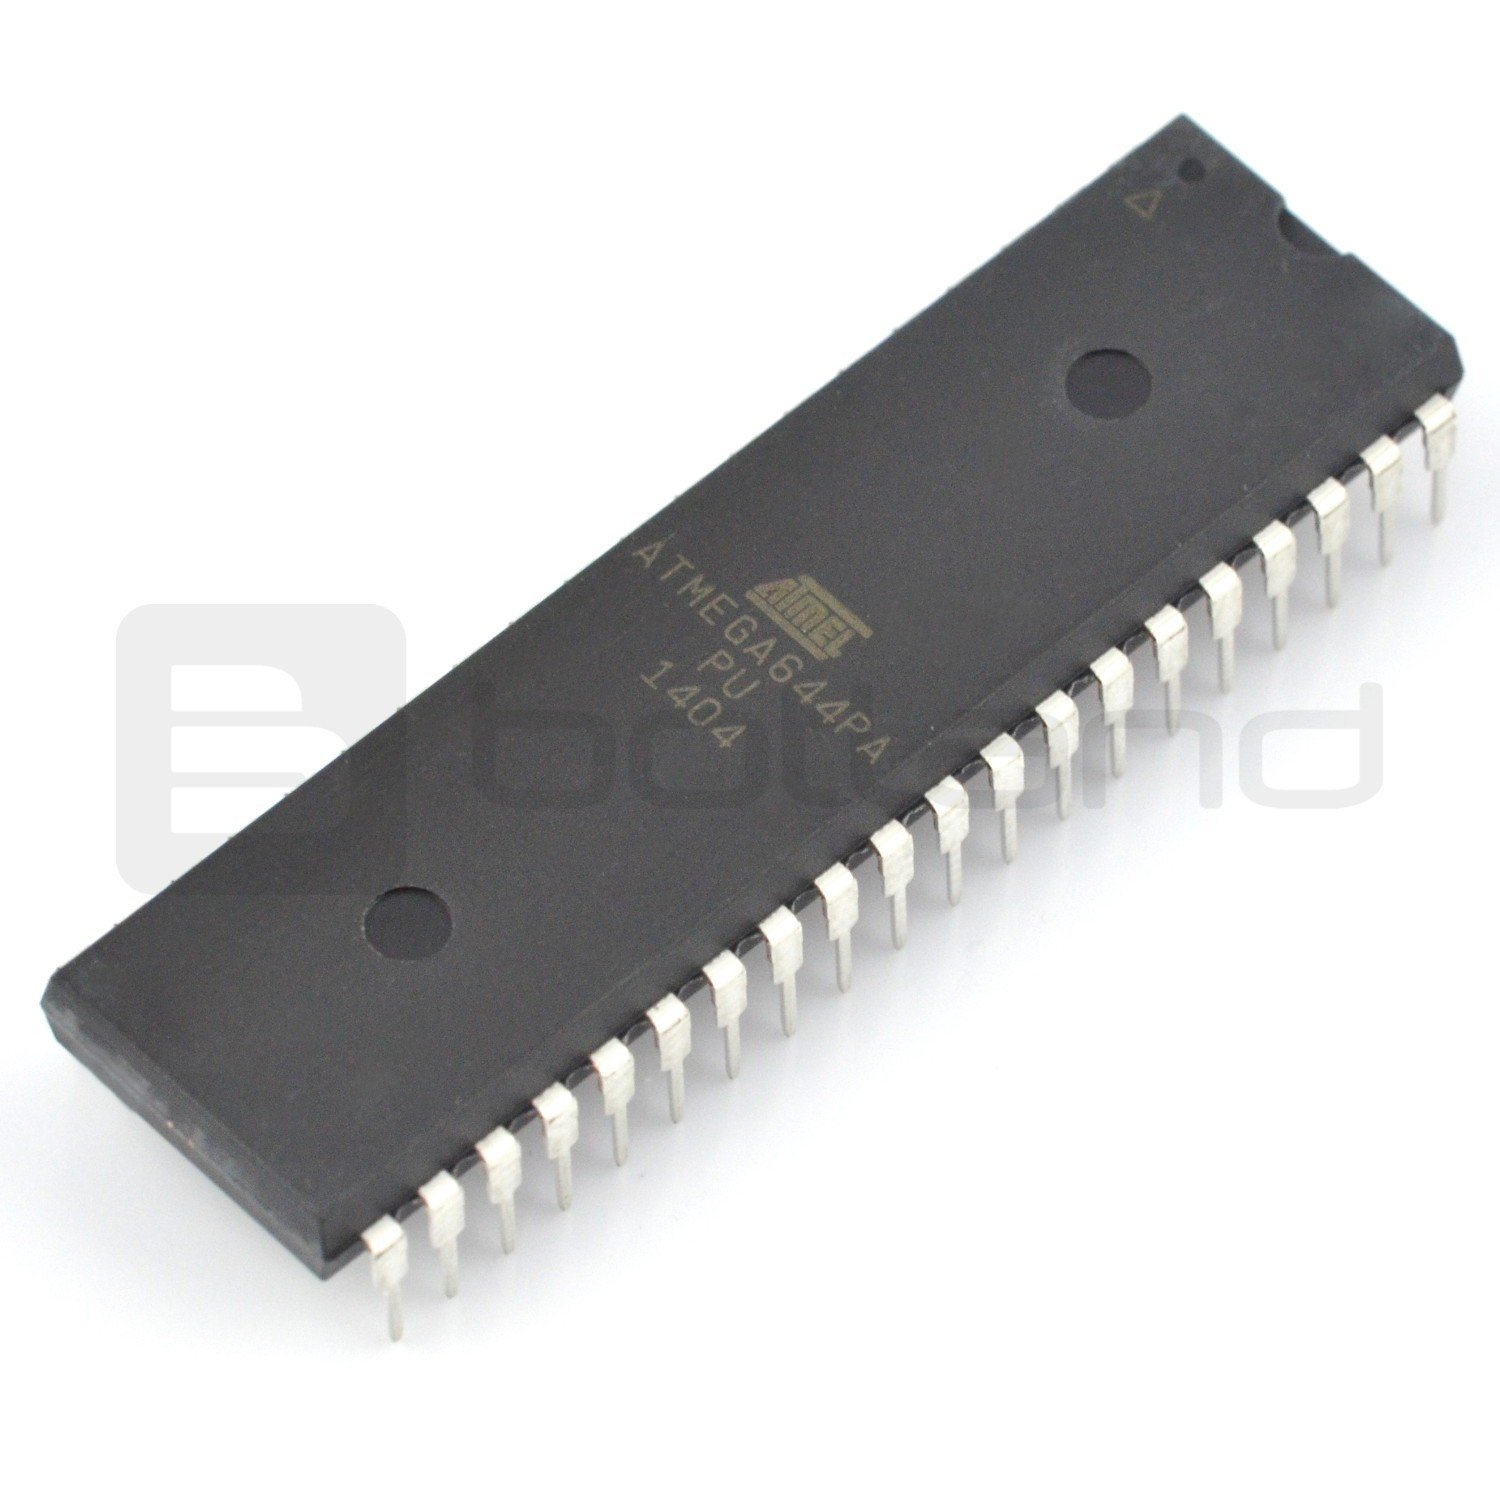 AVR-Mikrocontroller - ATmega644PA-PU - SMD